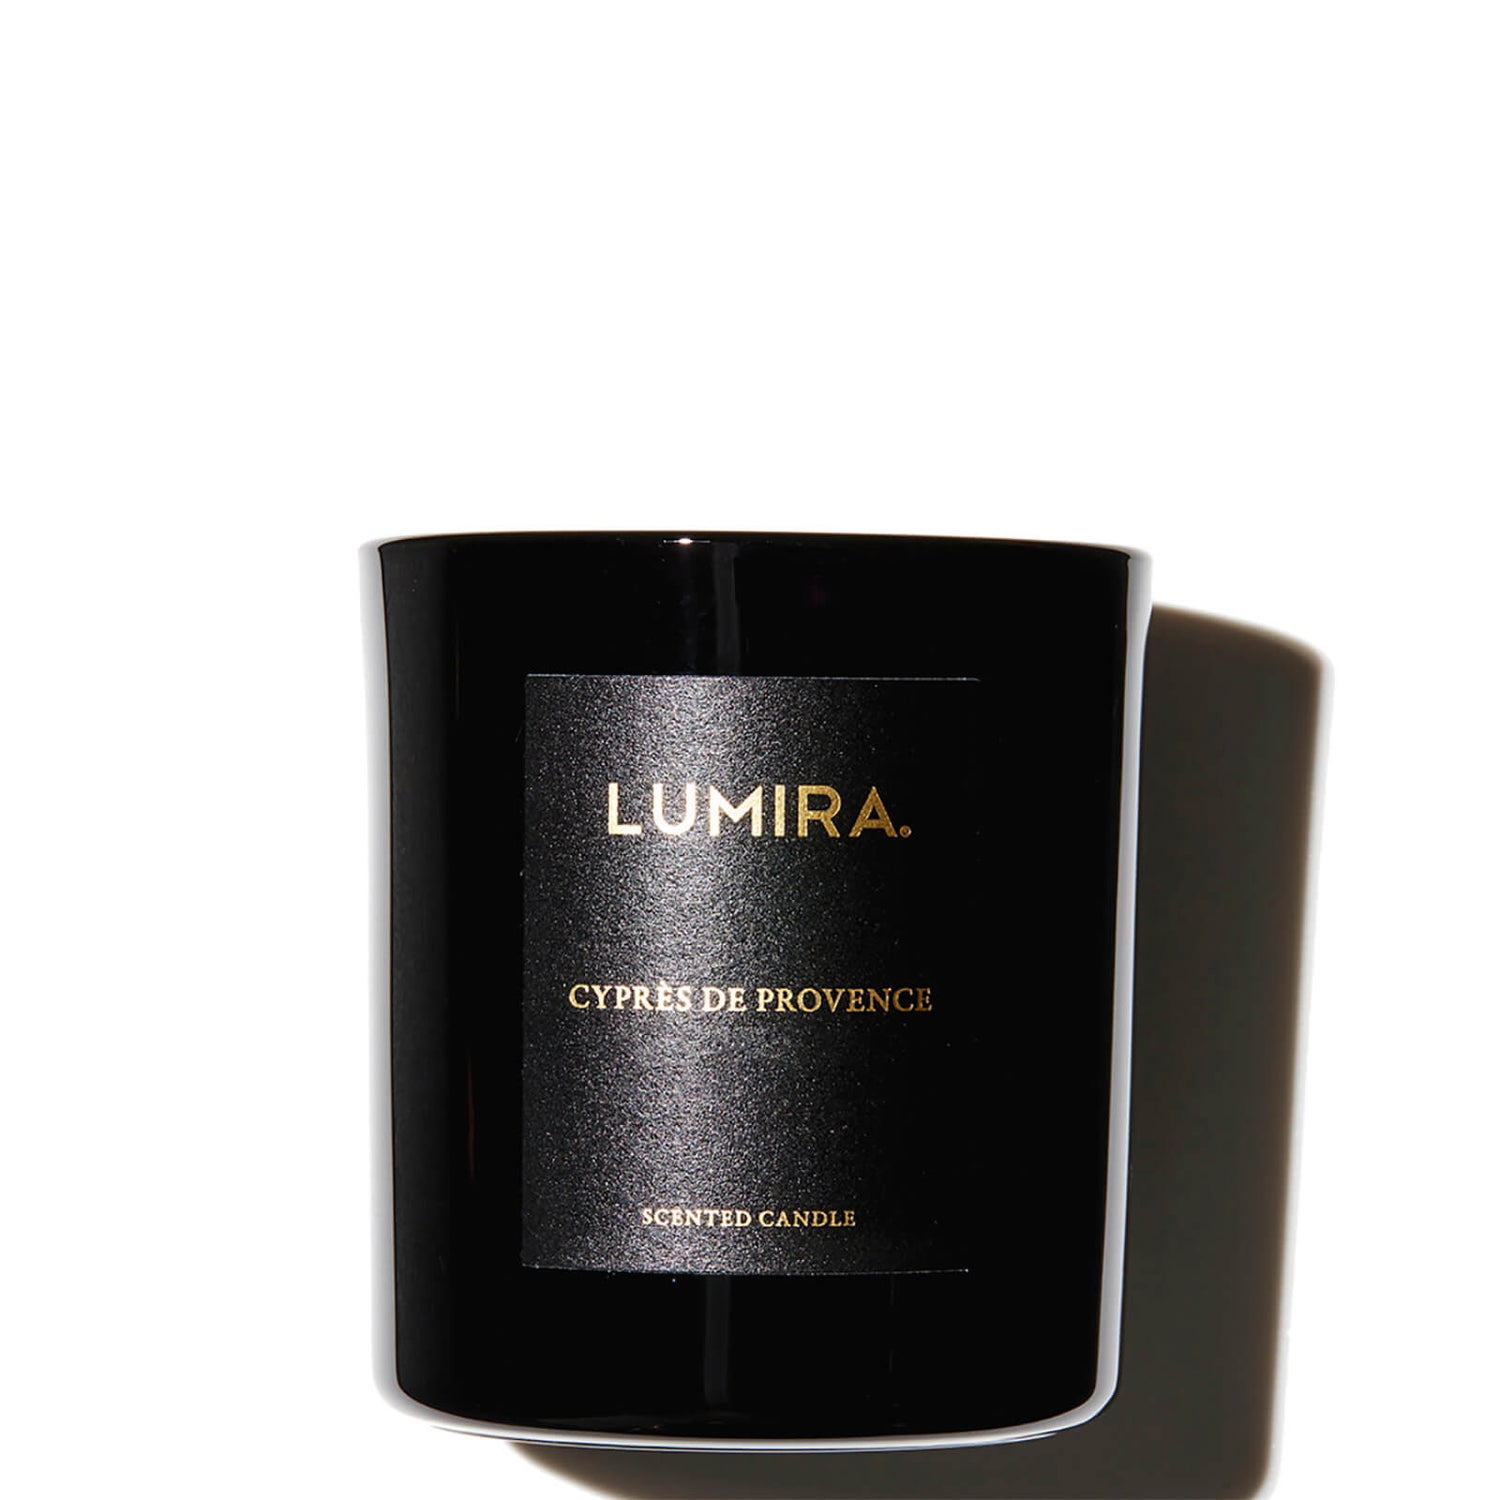 LUMIRA Cypress de Provence Black Candle 300g